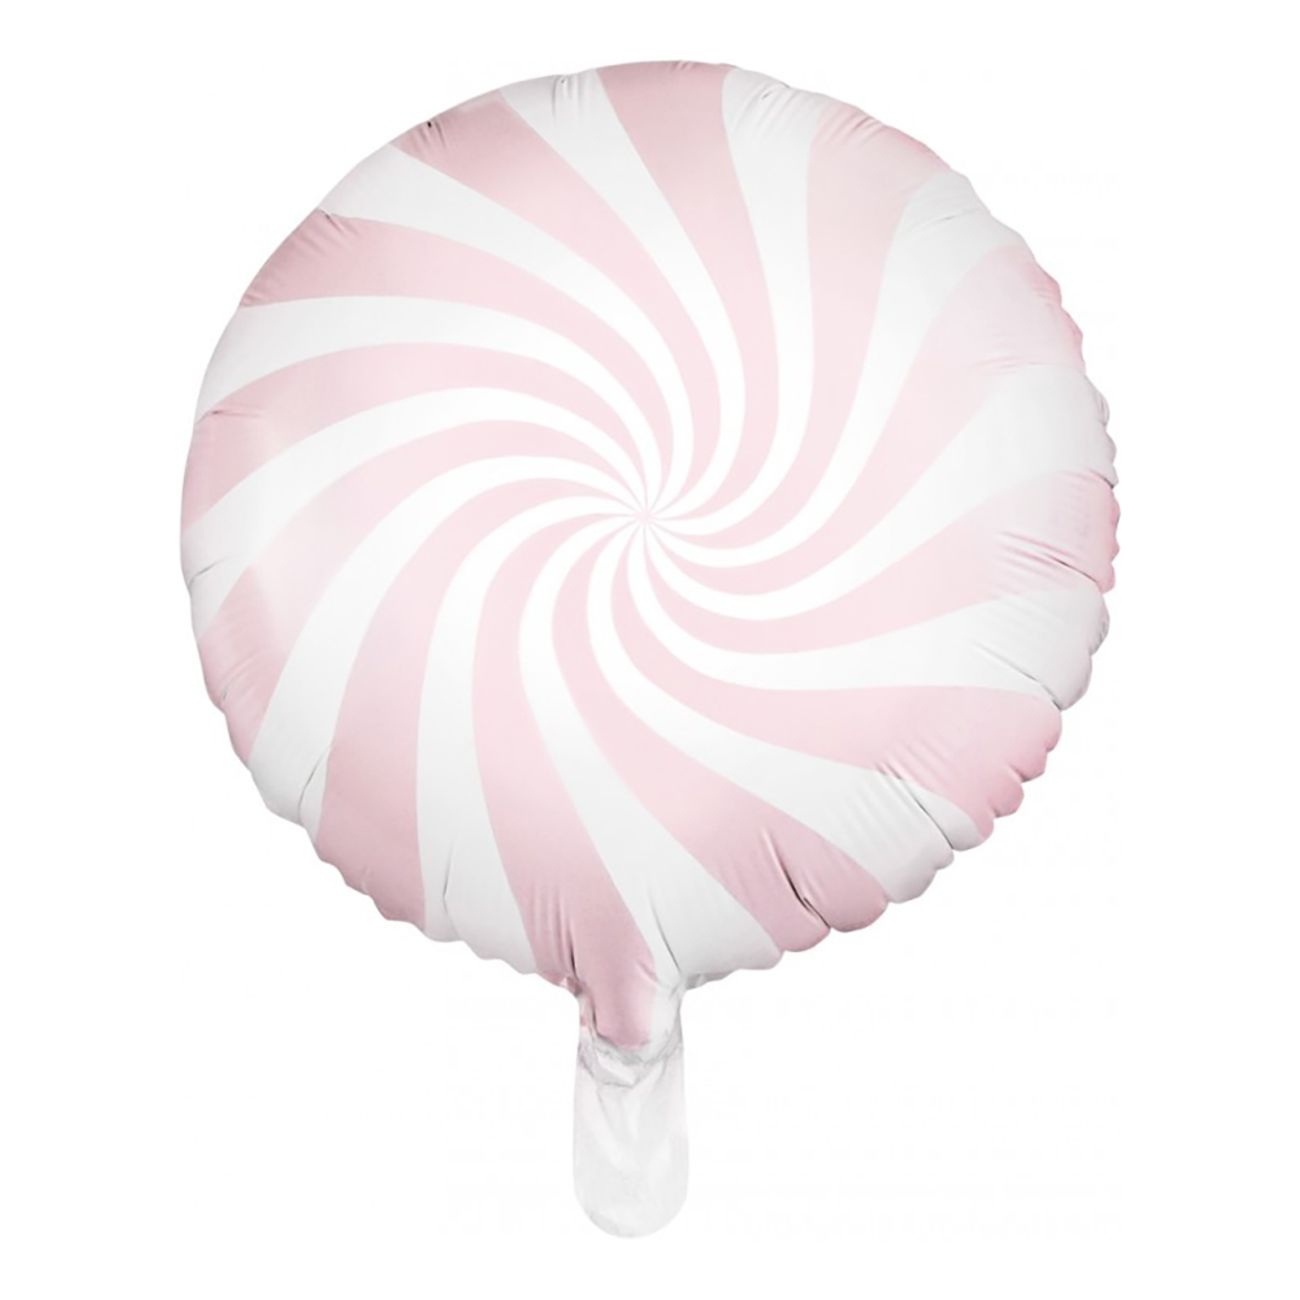 folieballong-candy-vitljusrosa-78830-1